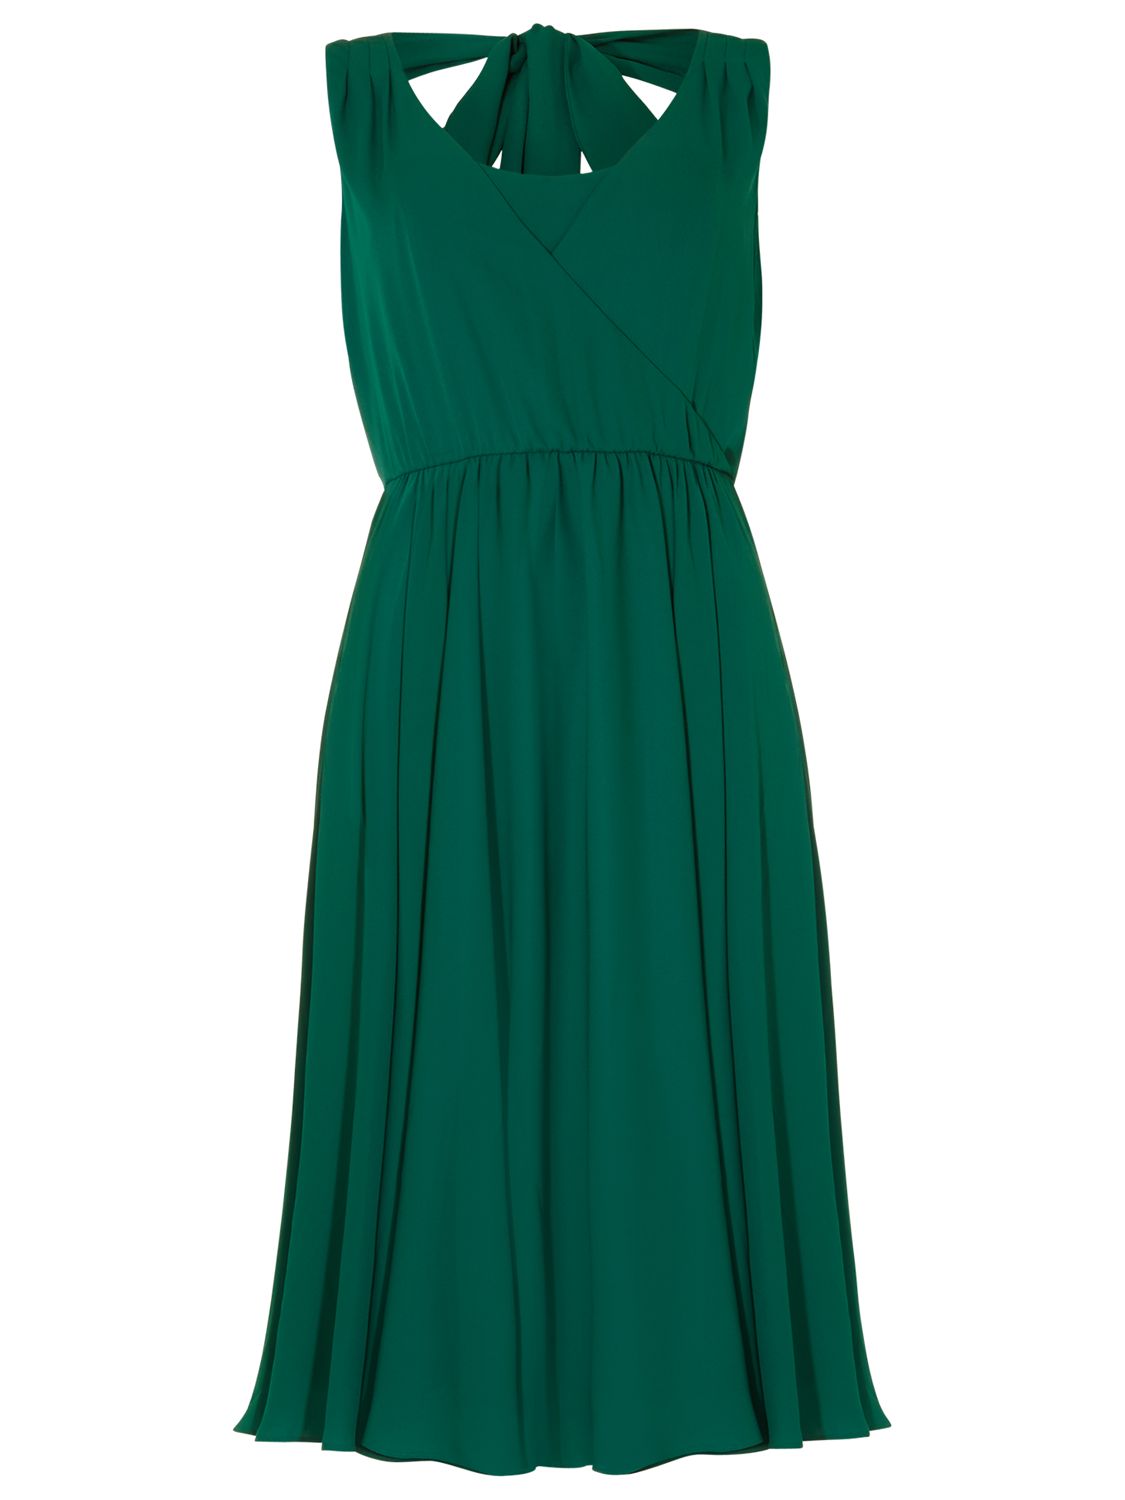 Phase Eight Rosa Dress, Emerald